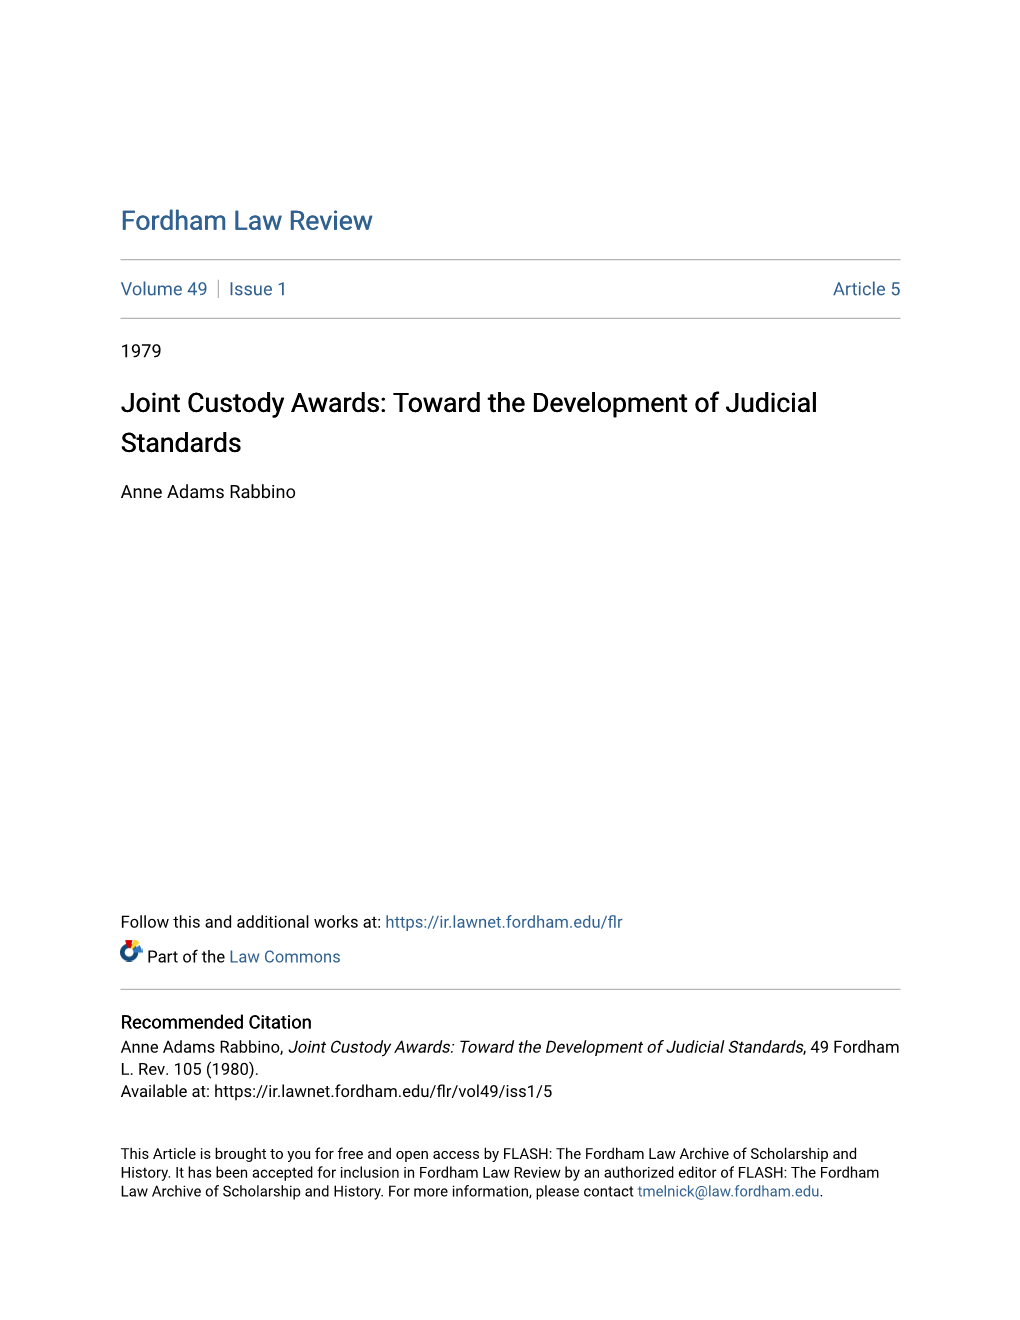 Joint Custody Awards: Toward the Development of Judicial Standards